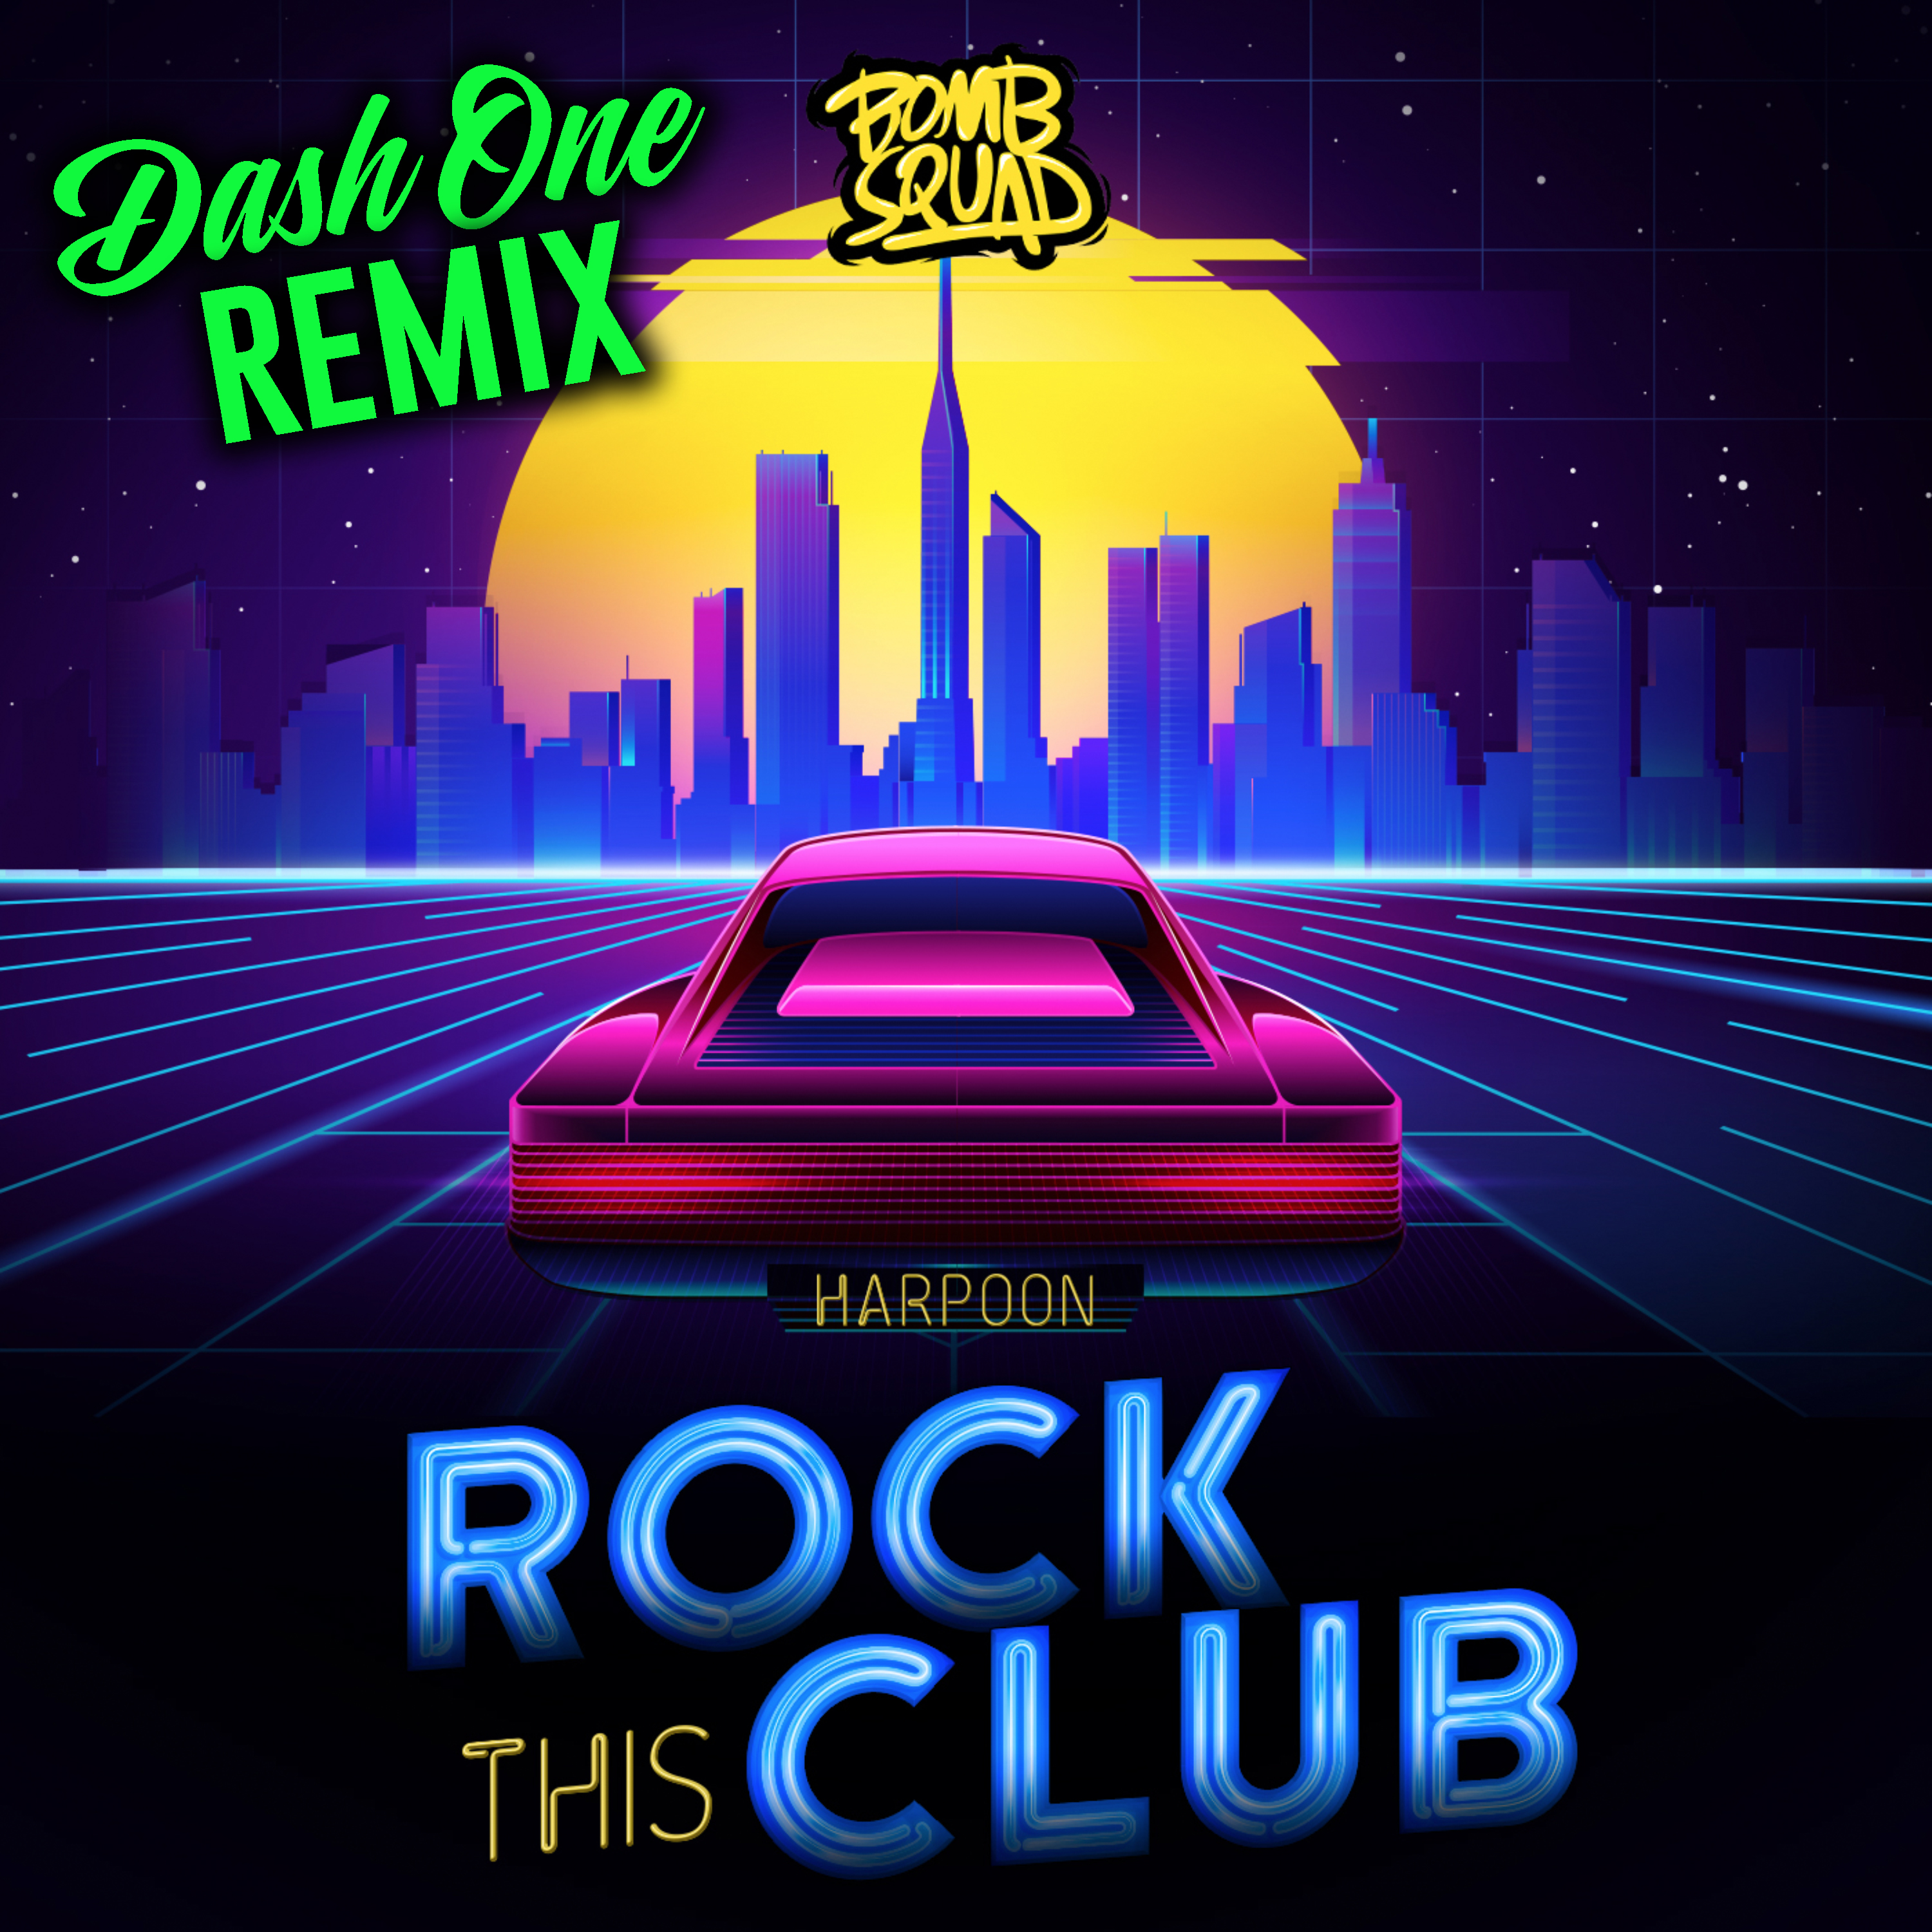 Rock This Club (Dash One Remix)